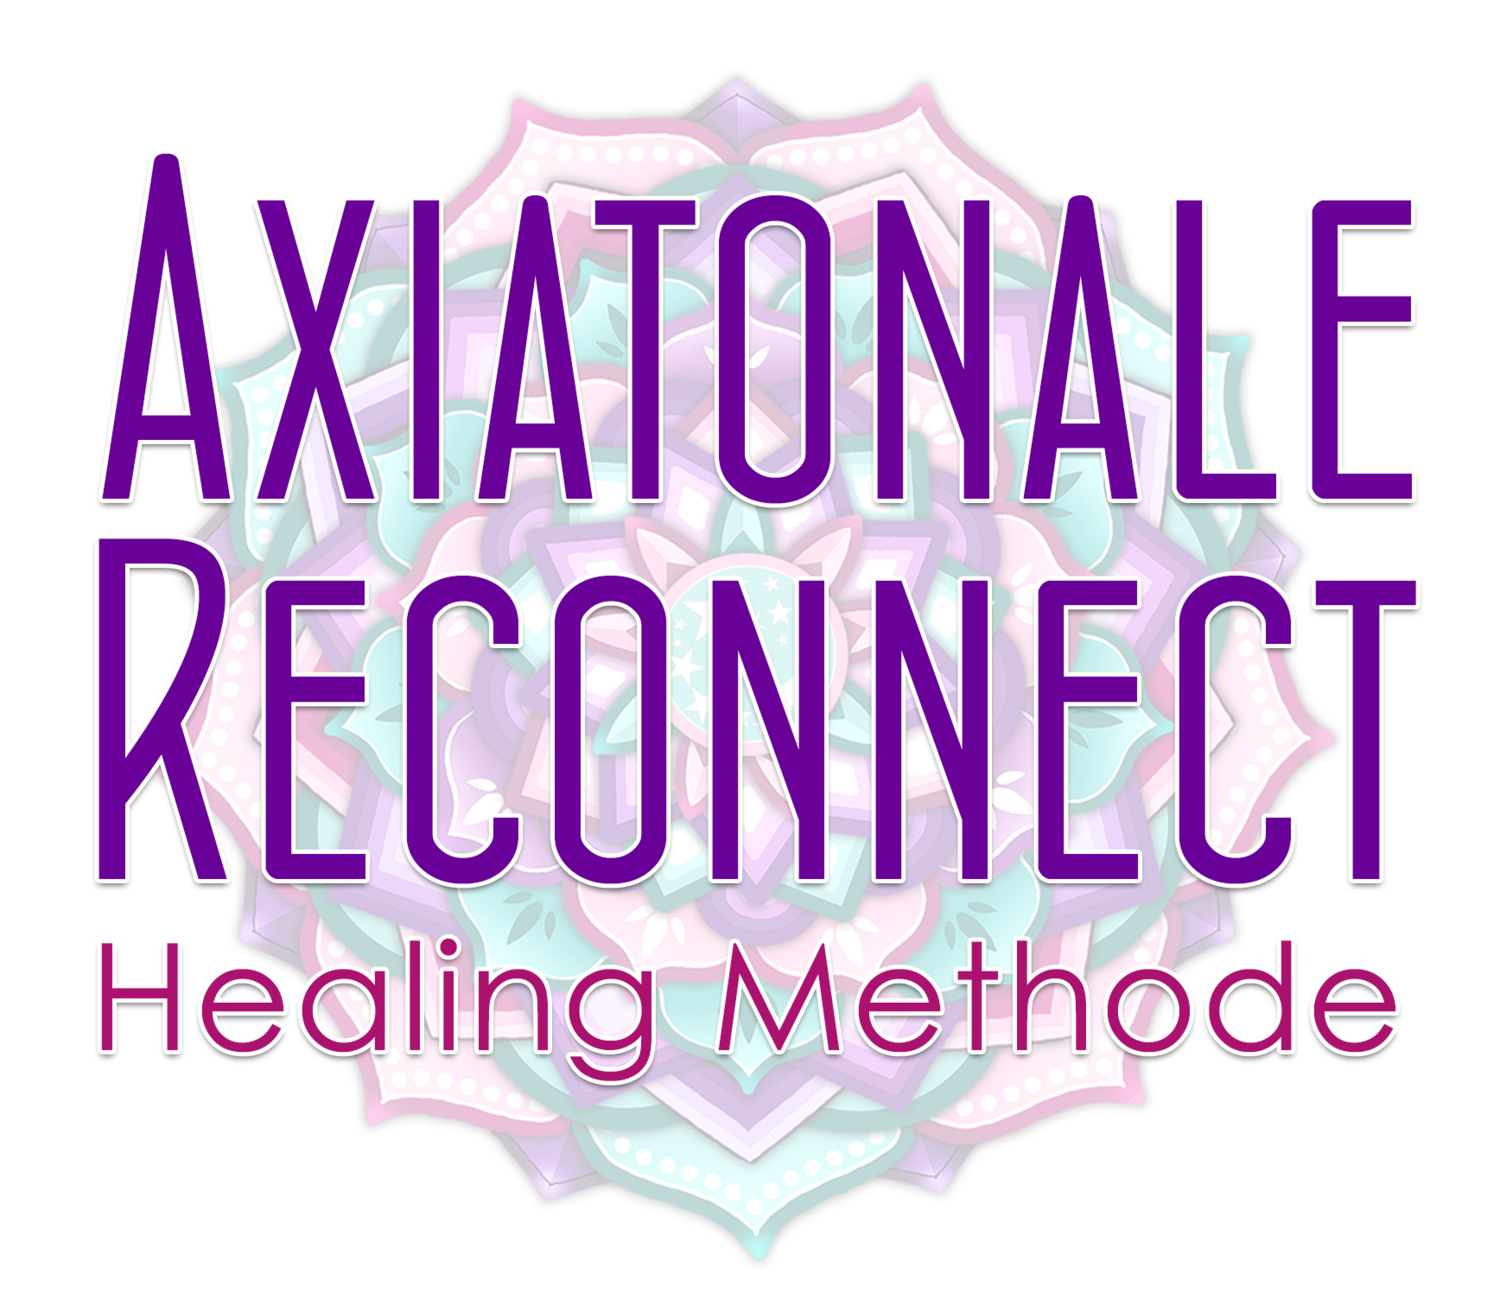 Axiatonale Reconnect Healing Methode opleidingsdag